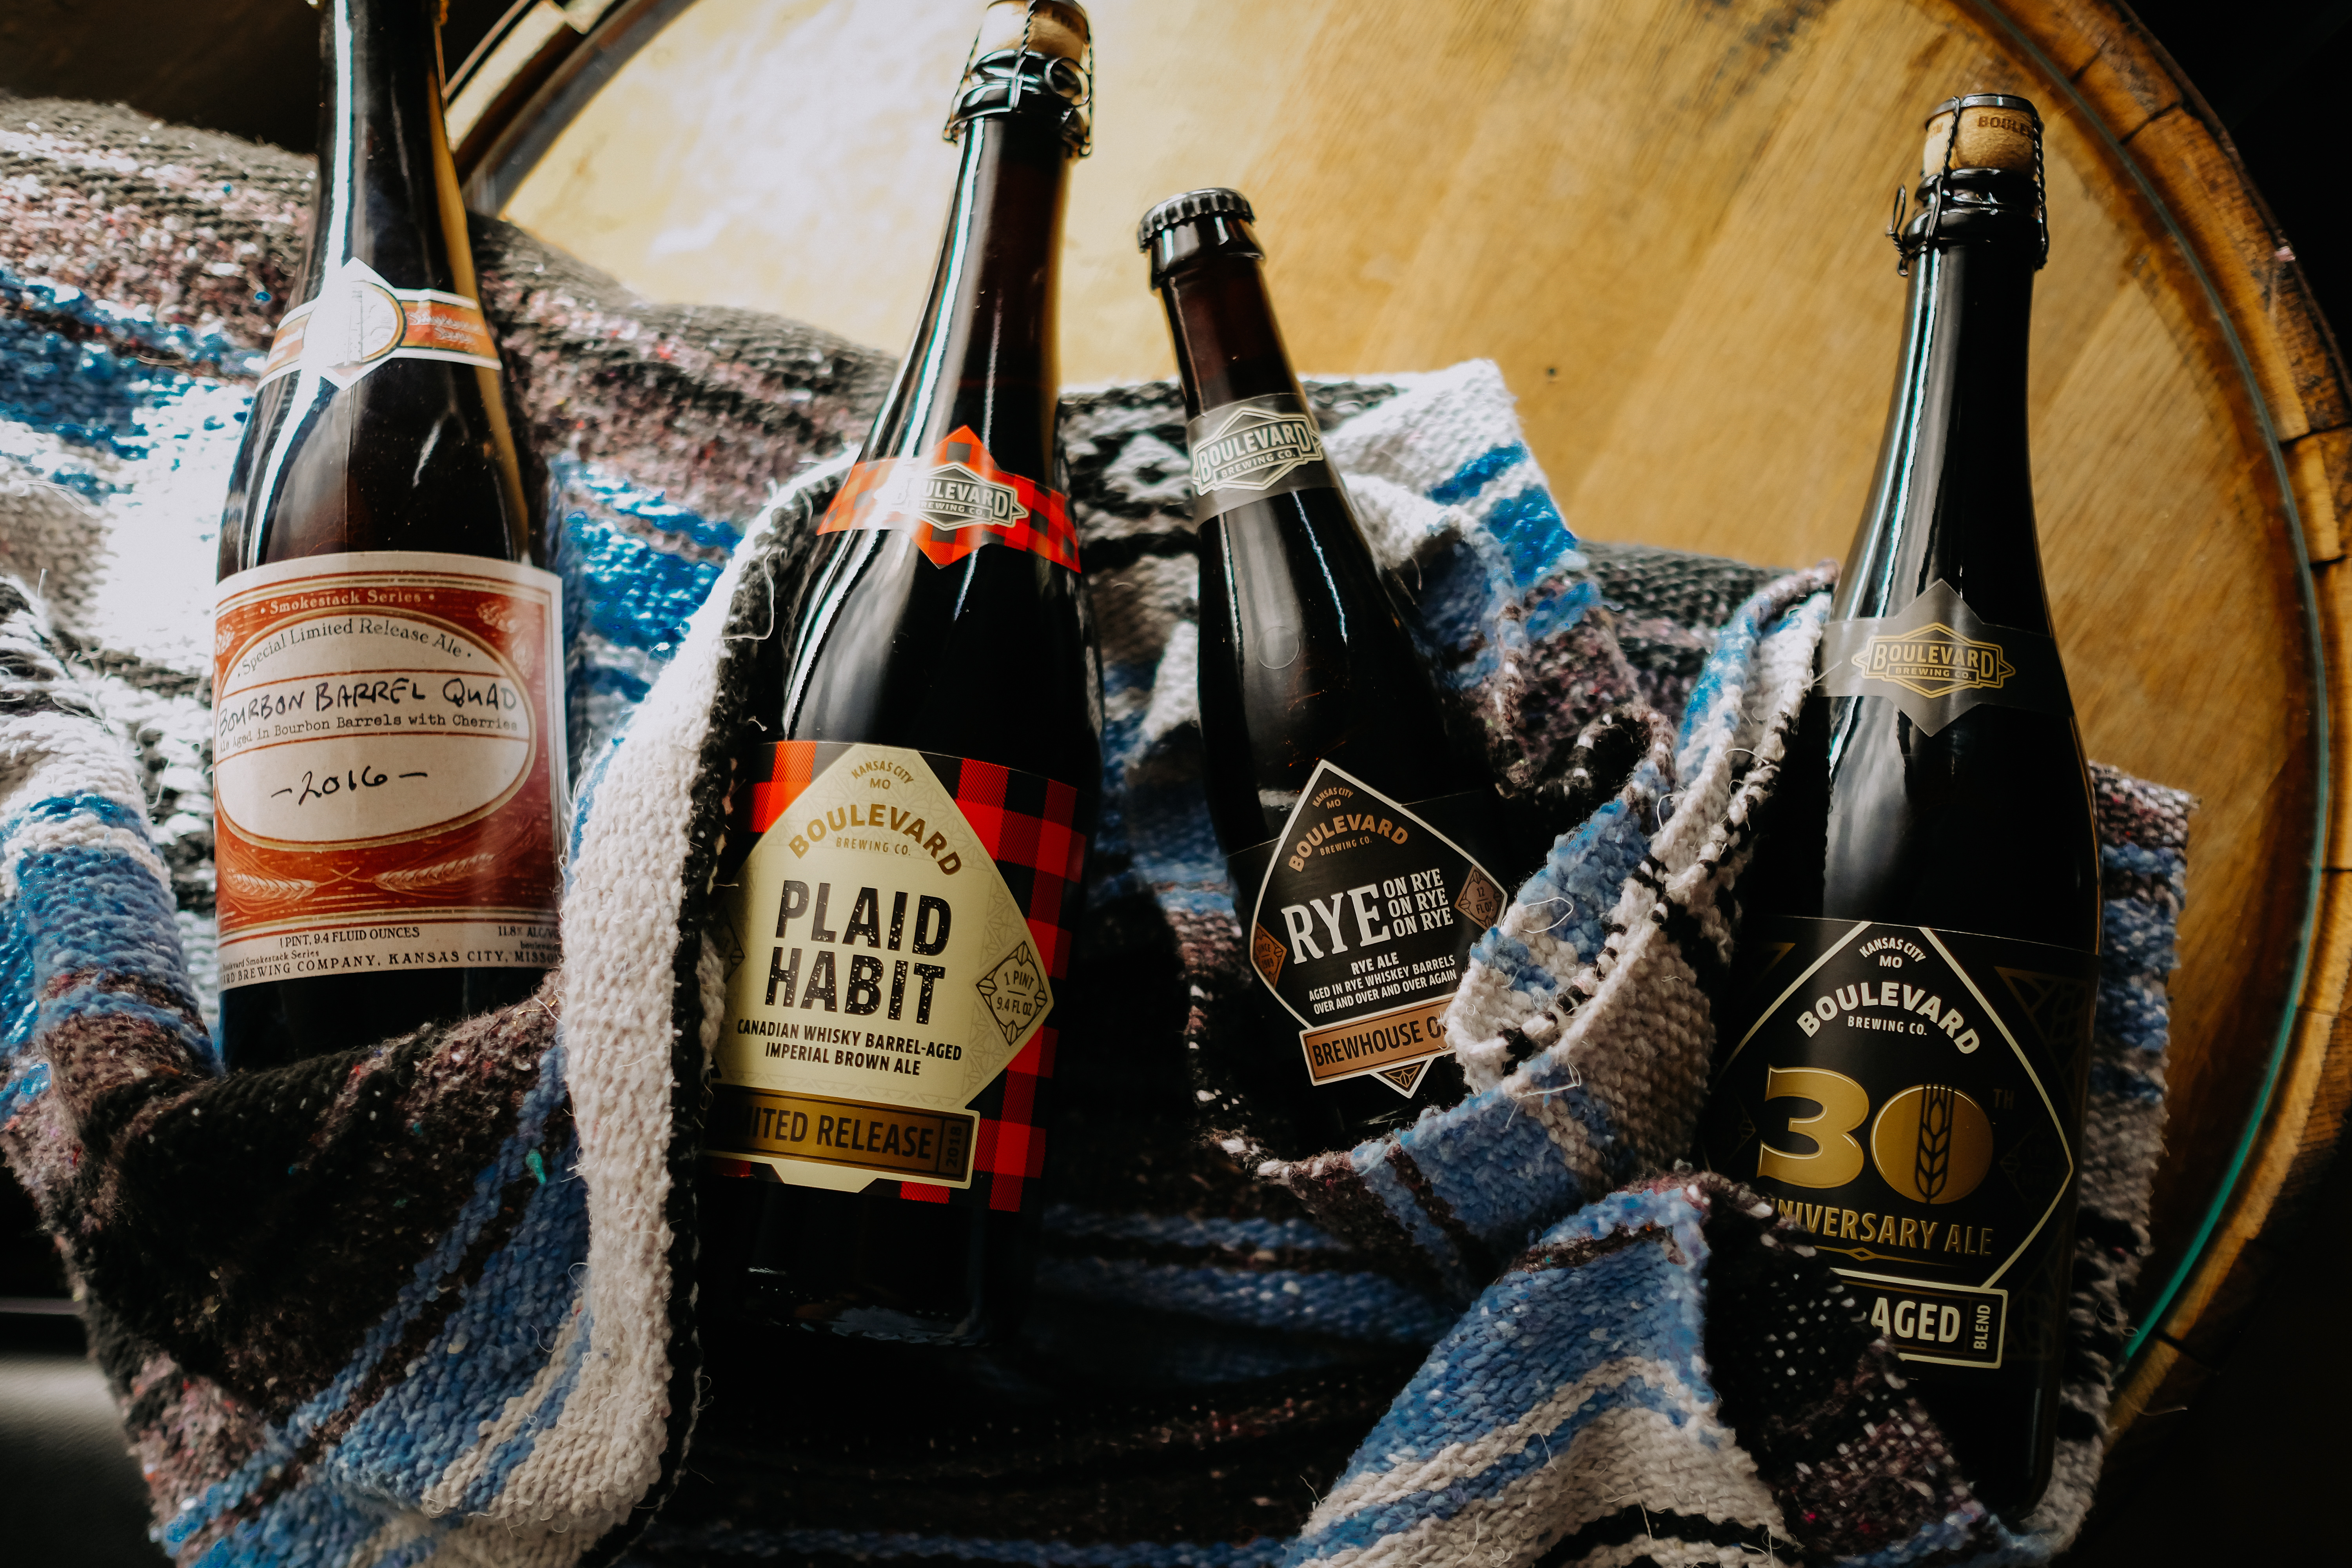 Bourbon Barrel Quad, Plaid Habit, Rye 4 and Thirtieth Anniversary bottles